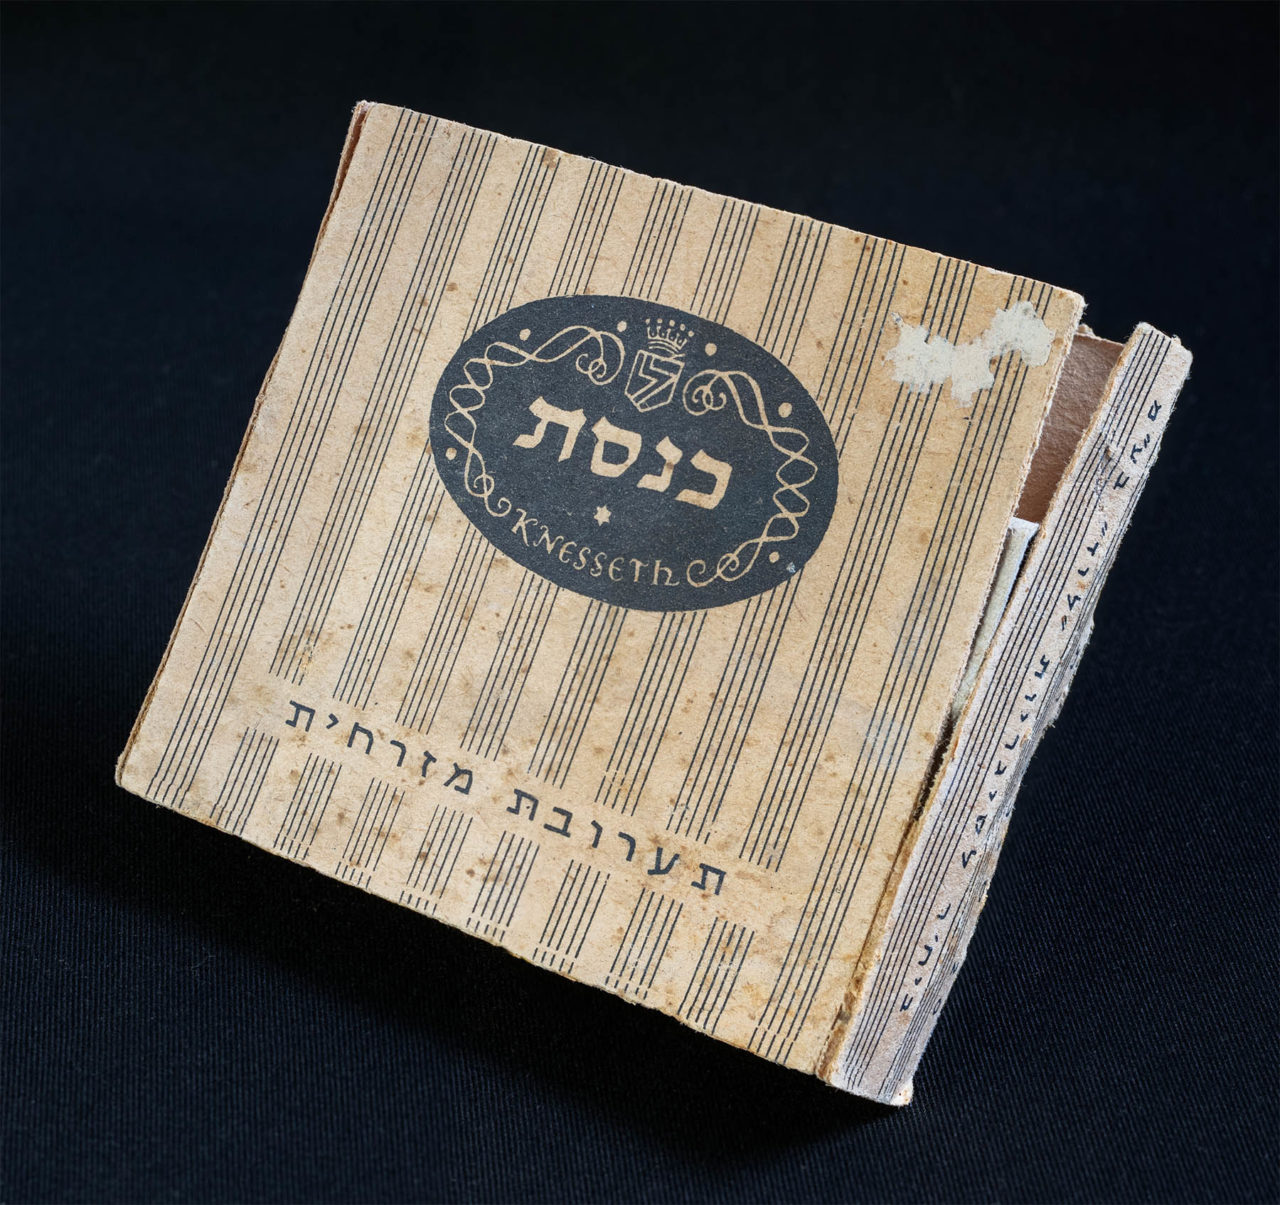 Knesset cigarette box